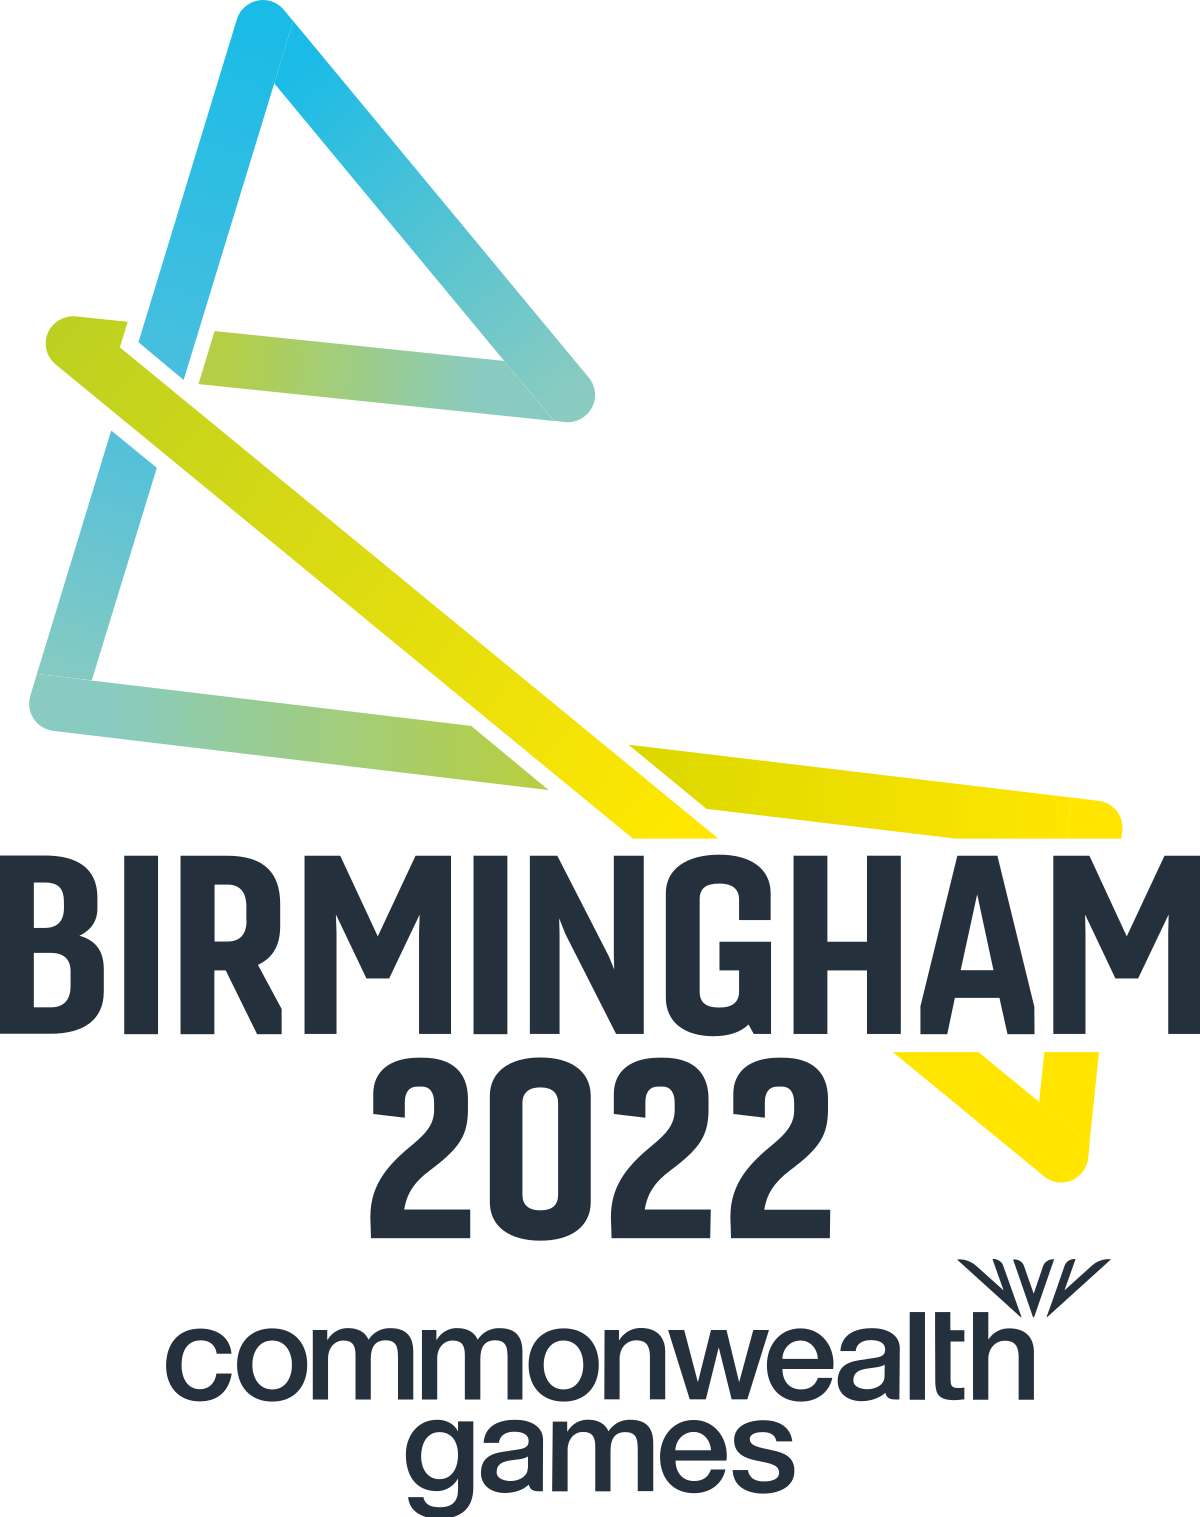 Birmingham_2022_Commonwealth_Games_logo.svg